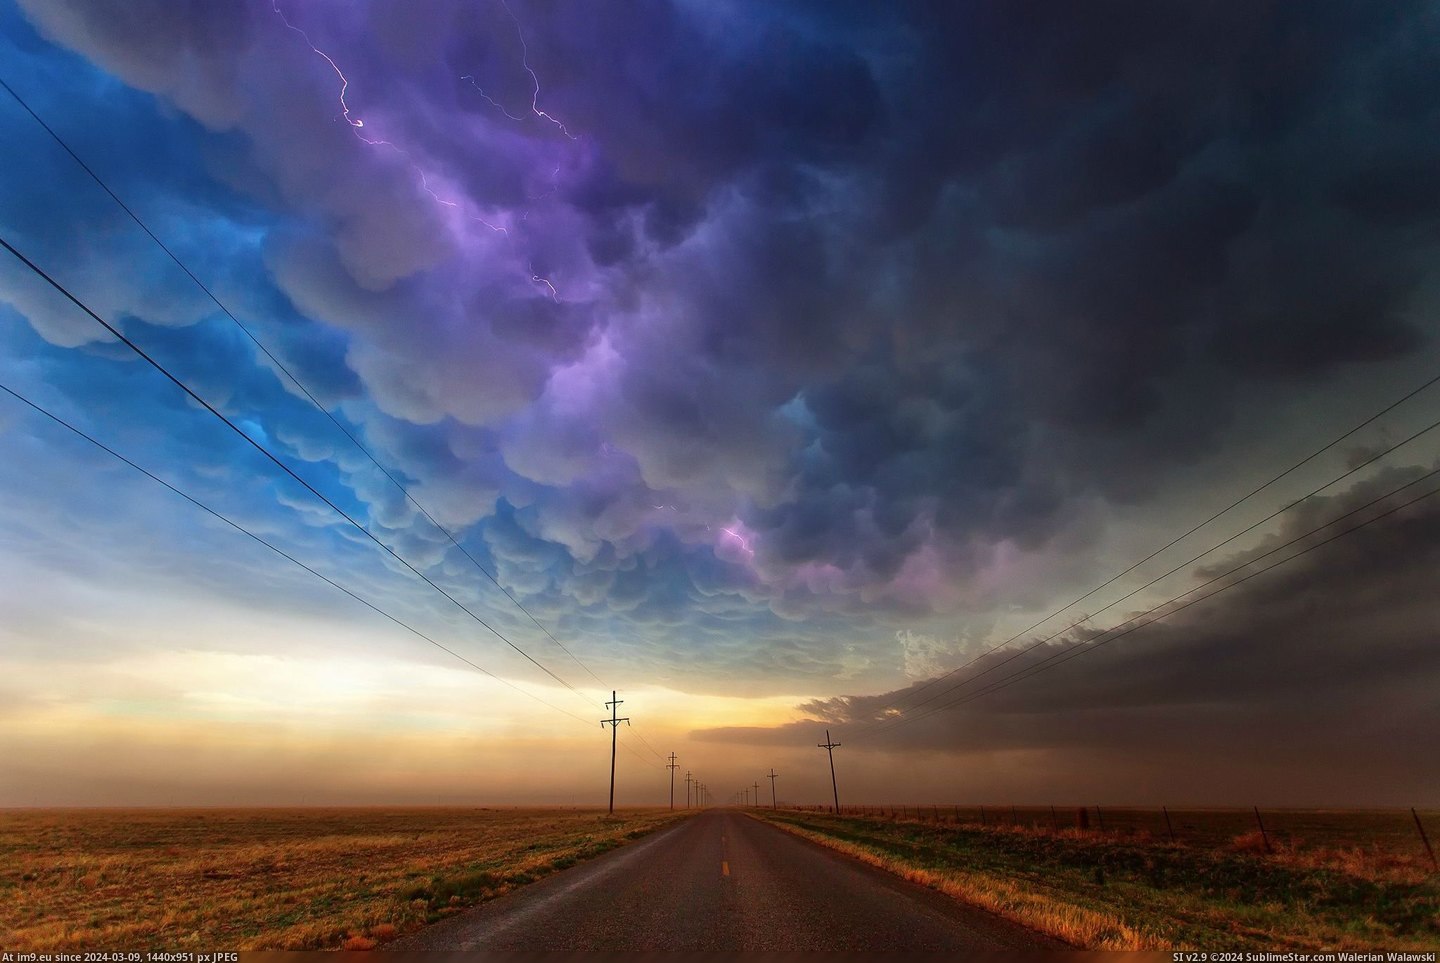 #Texas #Storm #Stunning [Pics] Stunning Storm Over Texas Pic. (Изображение из альбом My r/PICS favs))